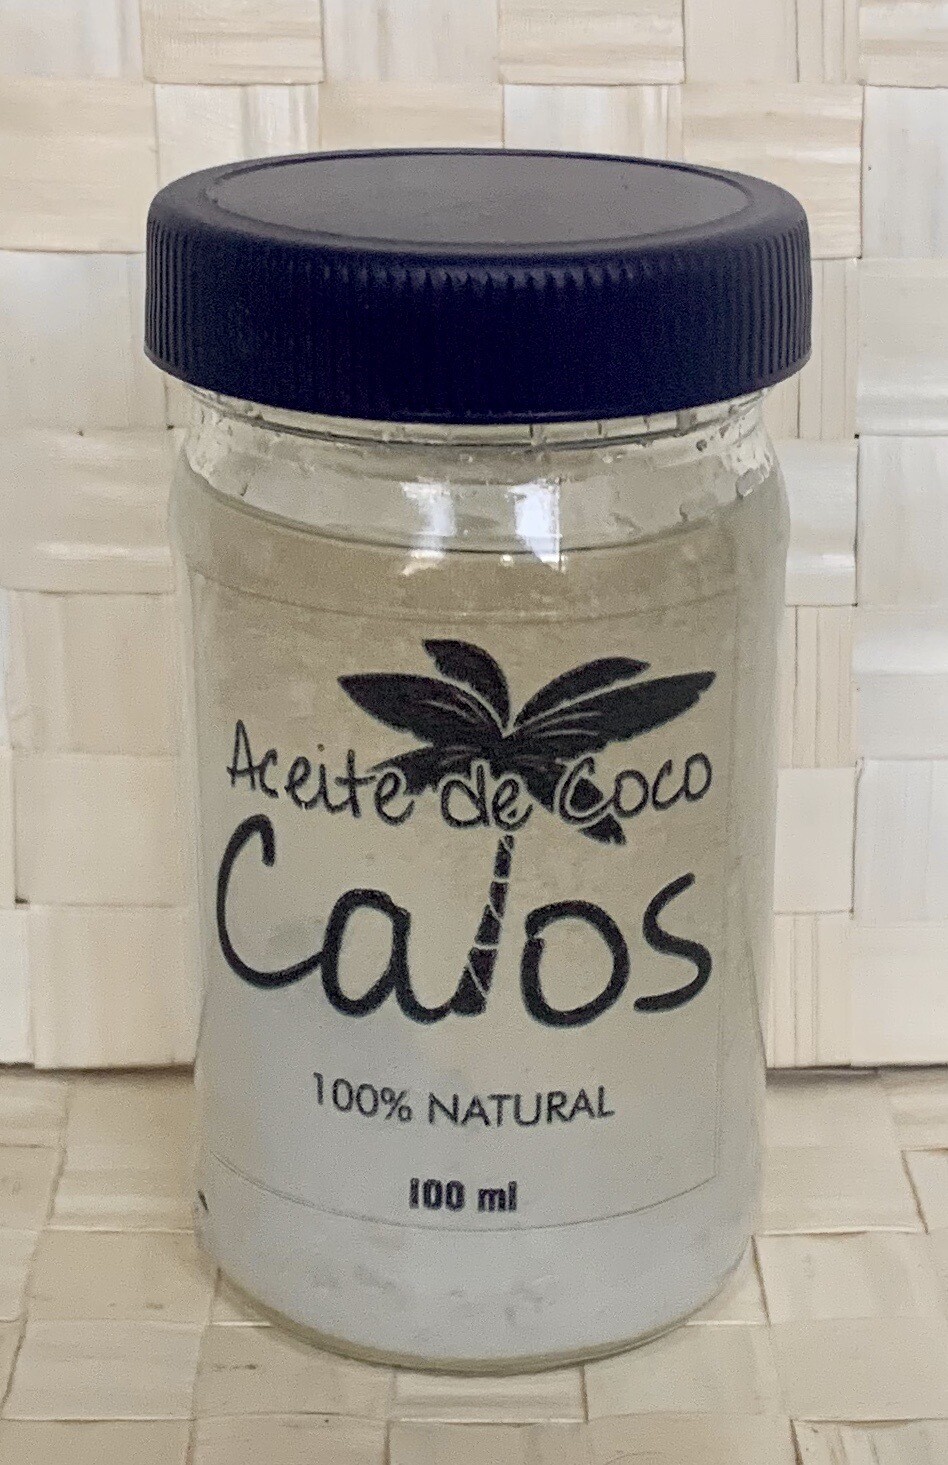 Calos aceite de coco 100% natural 100 ml